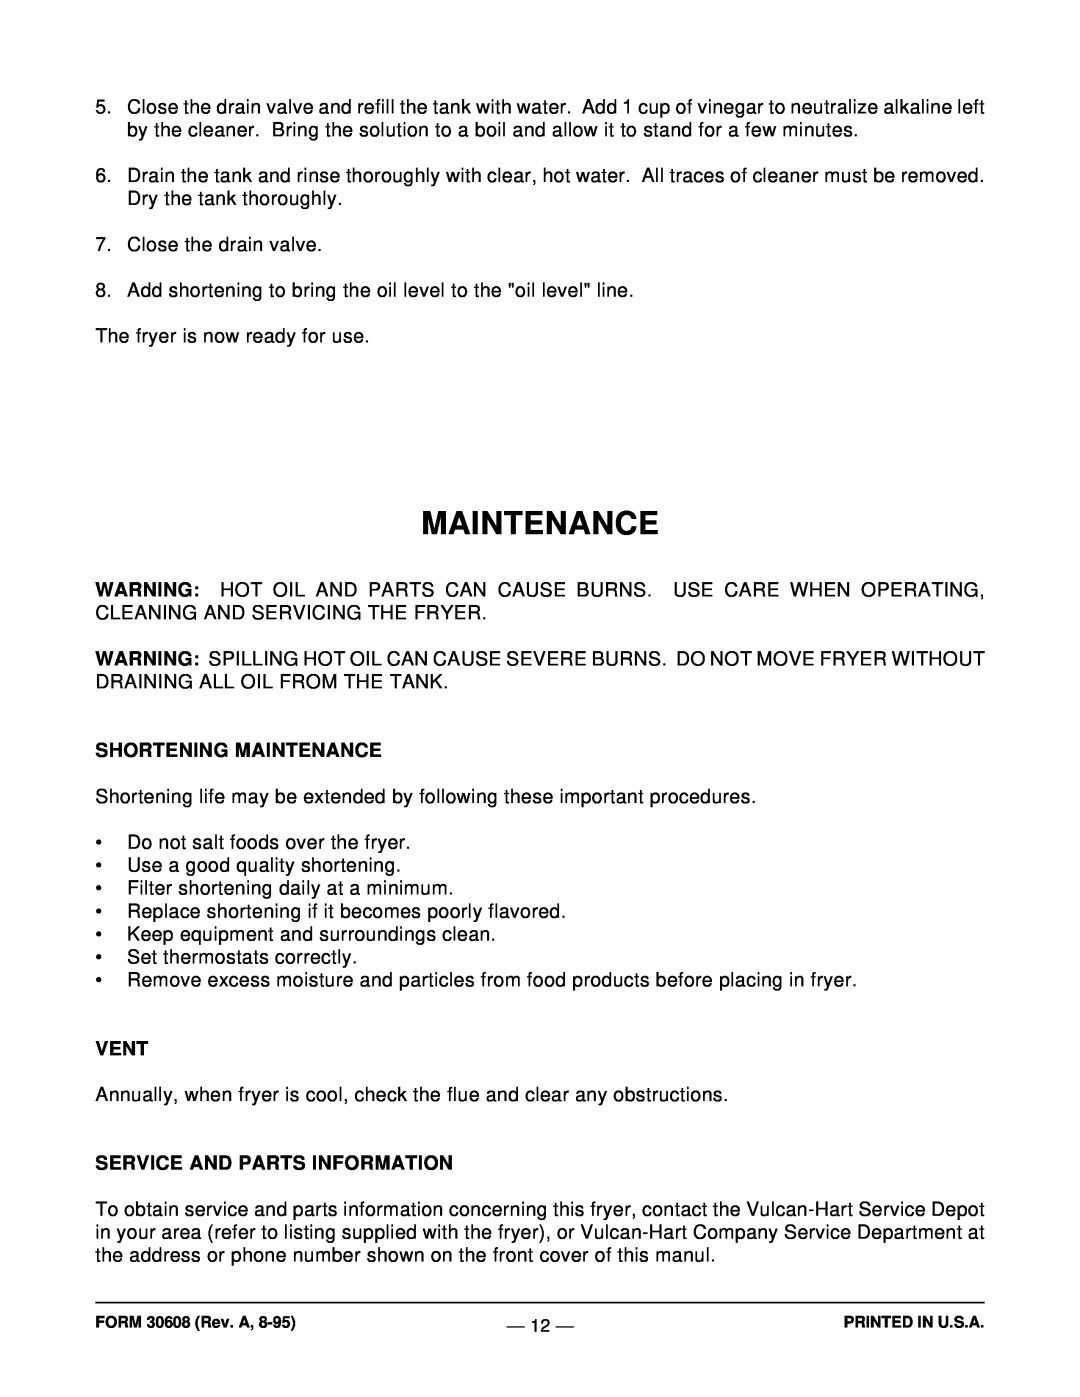 Vulcan-Hart TK65 operation manual Shortening Maintenance, Vent, Service And Parts Information 